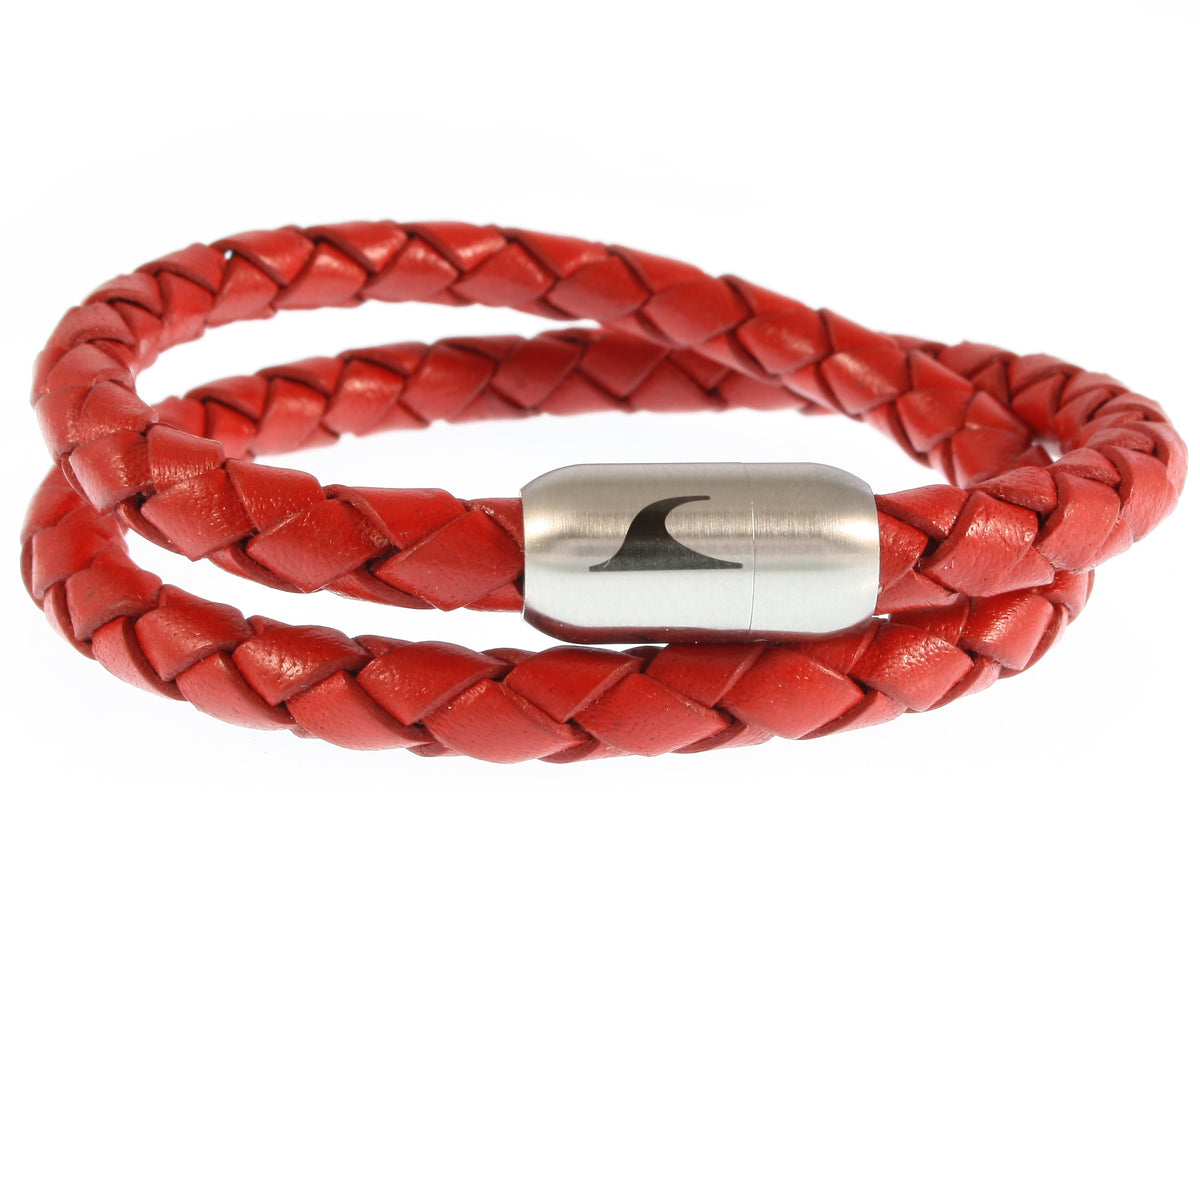 Leder-Armband-Damen-hawaii-rot-geflochten-Edelstahlverschluss-vorn-wavepirate-shop-f